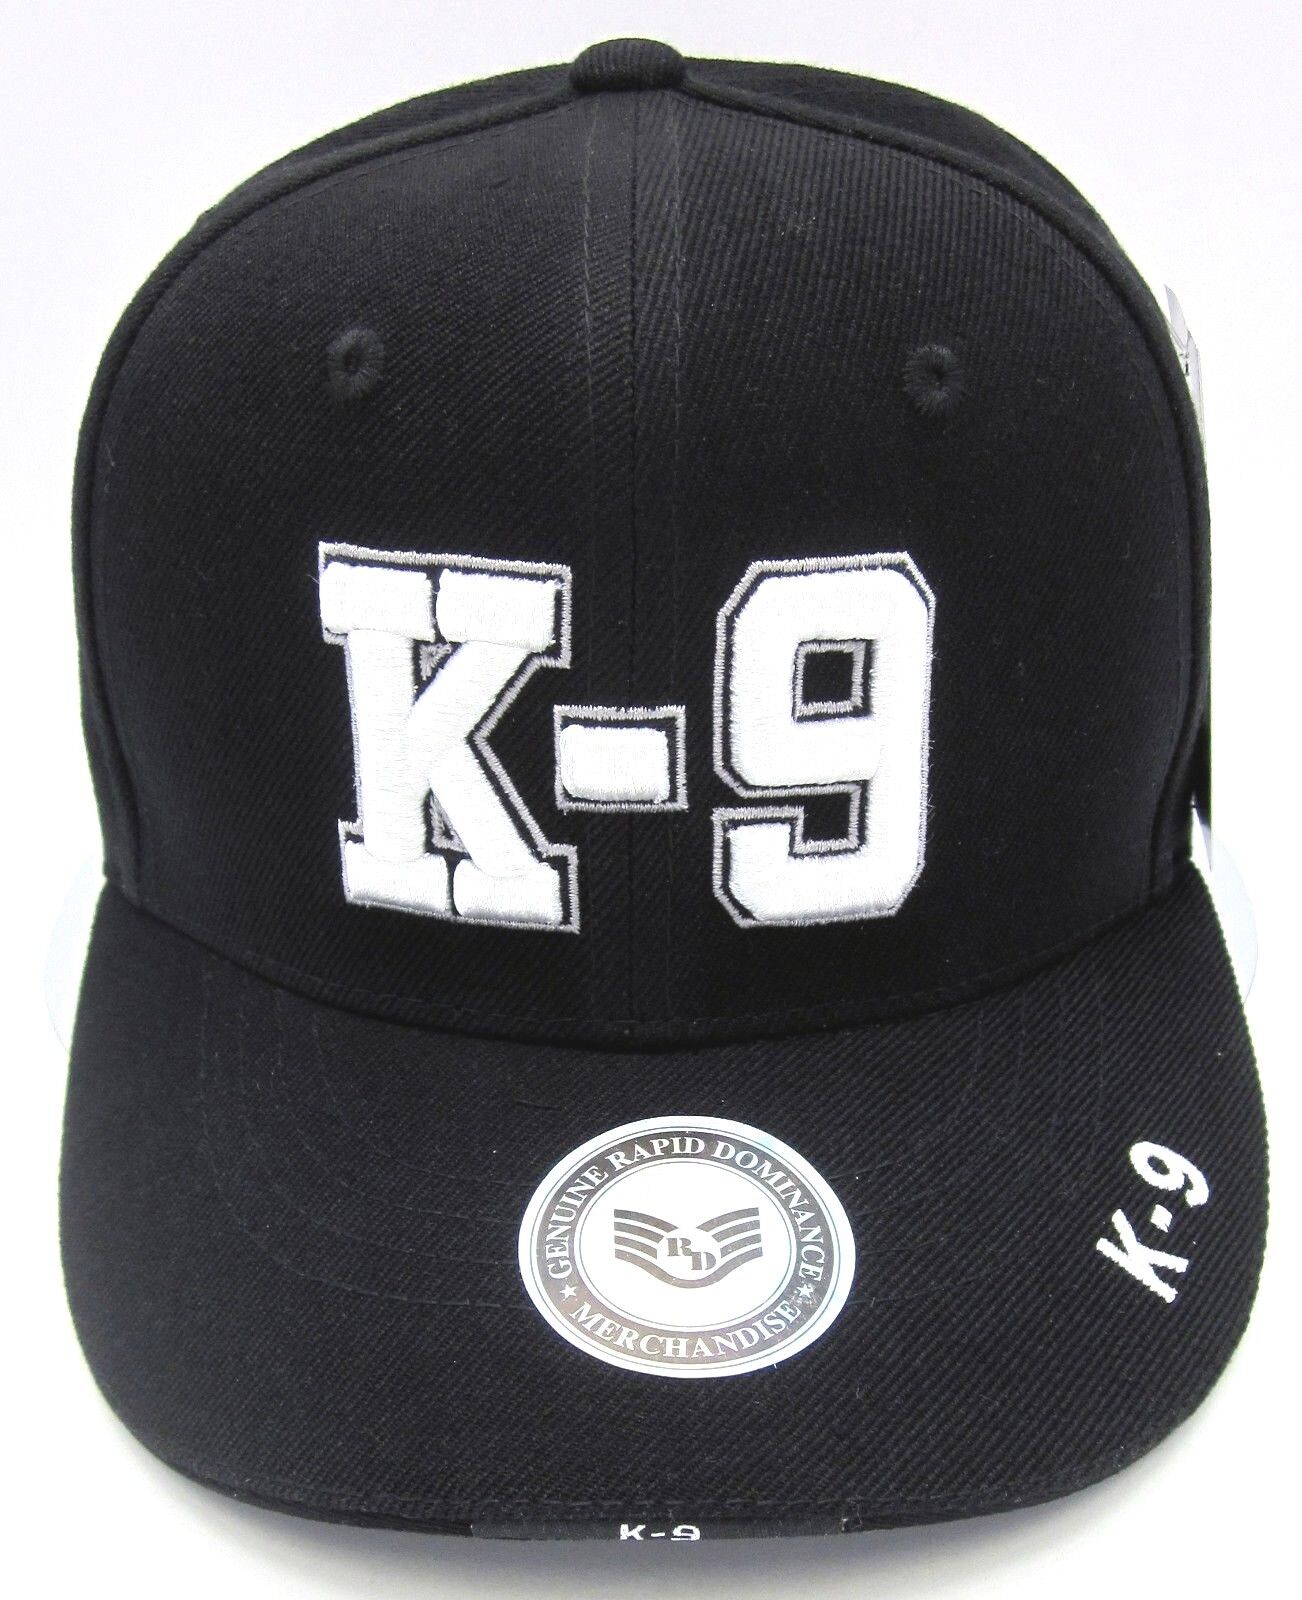 K9 Police Dog Ball Cap Hat K-9 Law Enforcement Adjustable Hats Caps Black New